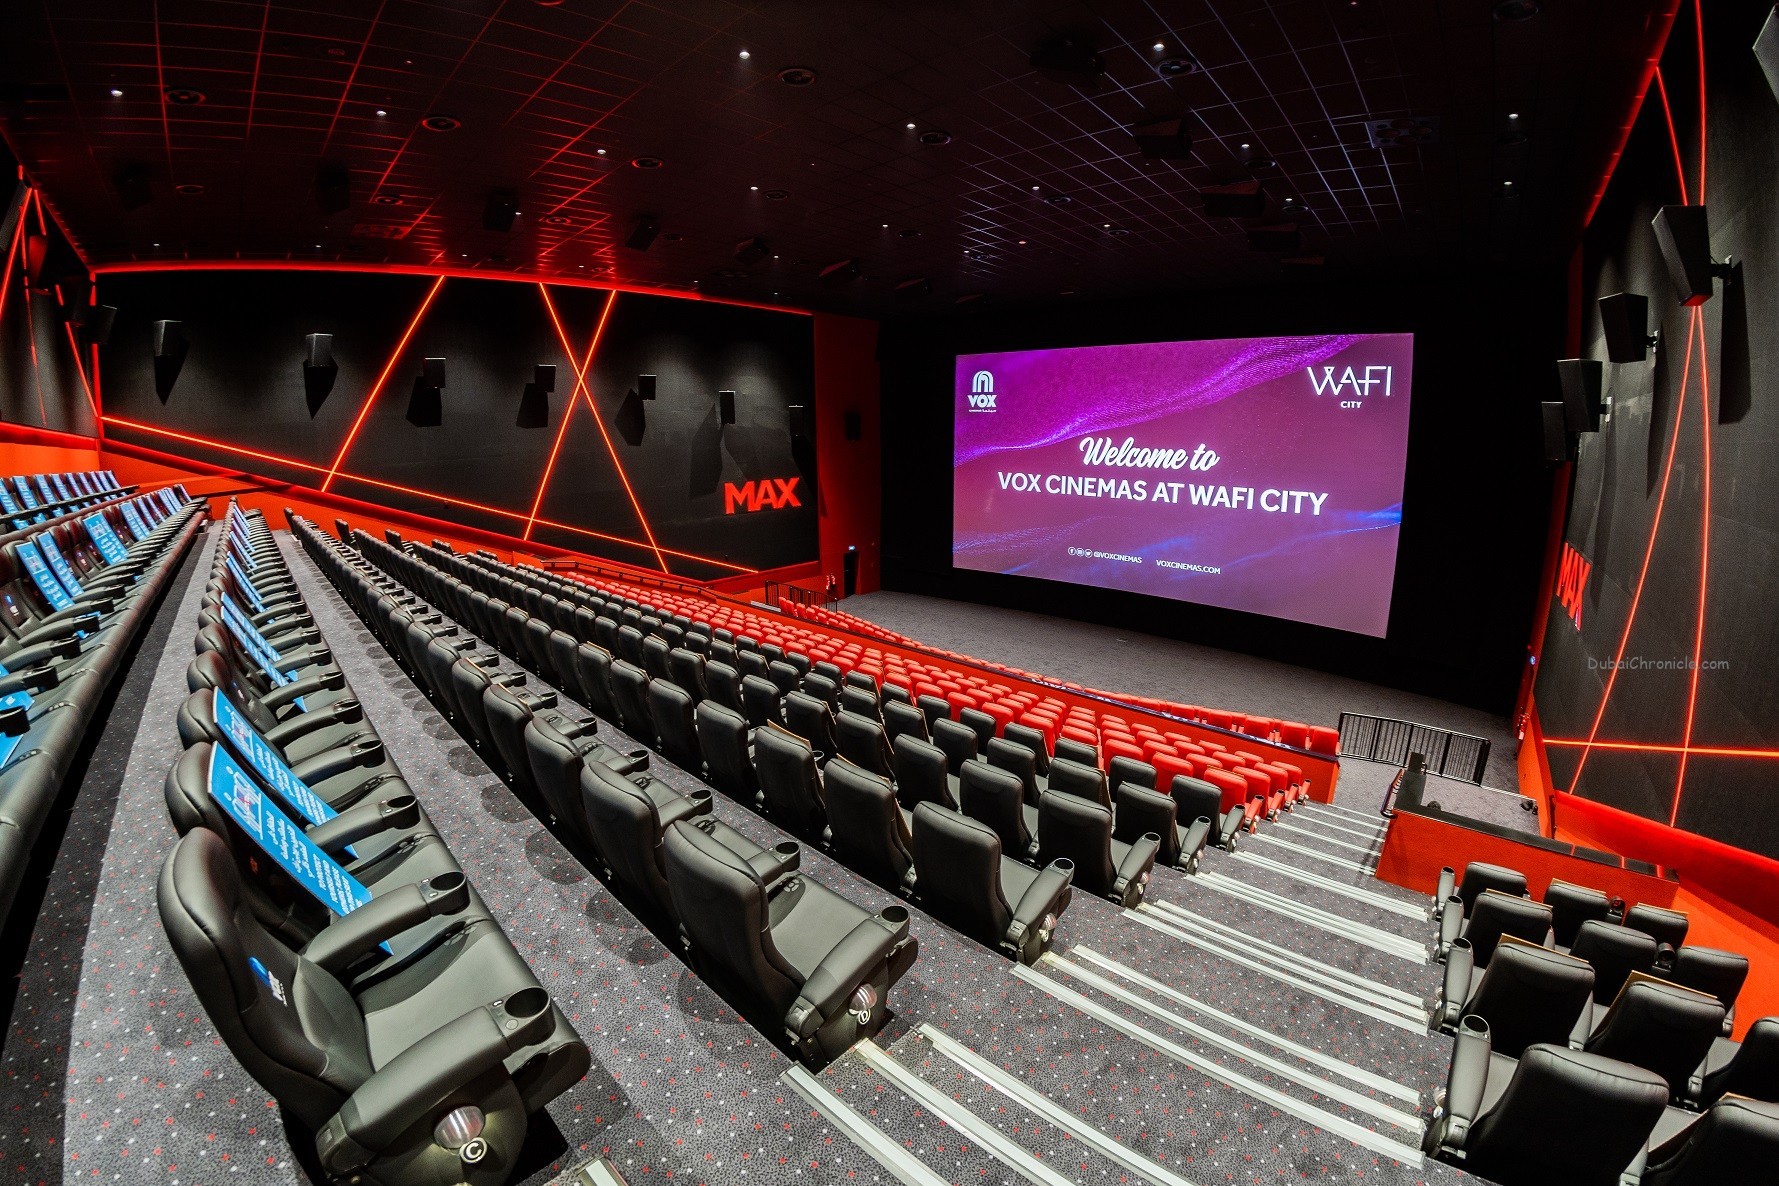 Vox cinema at Majid Al Futtaim